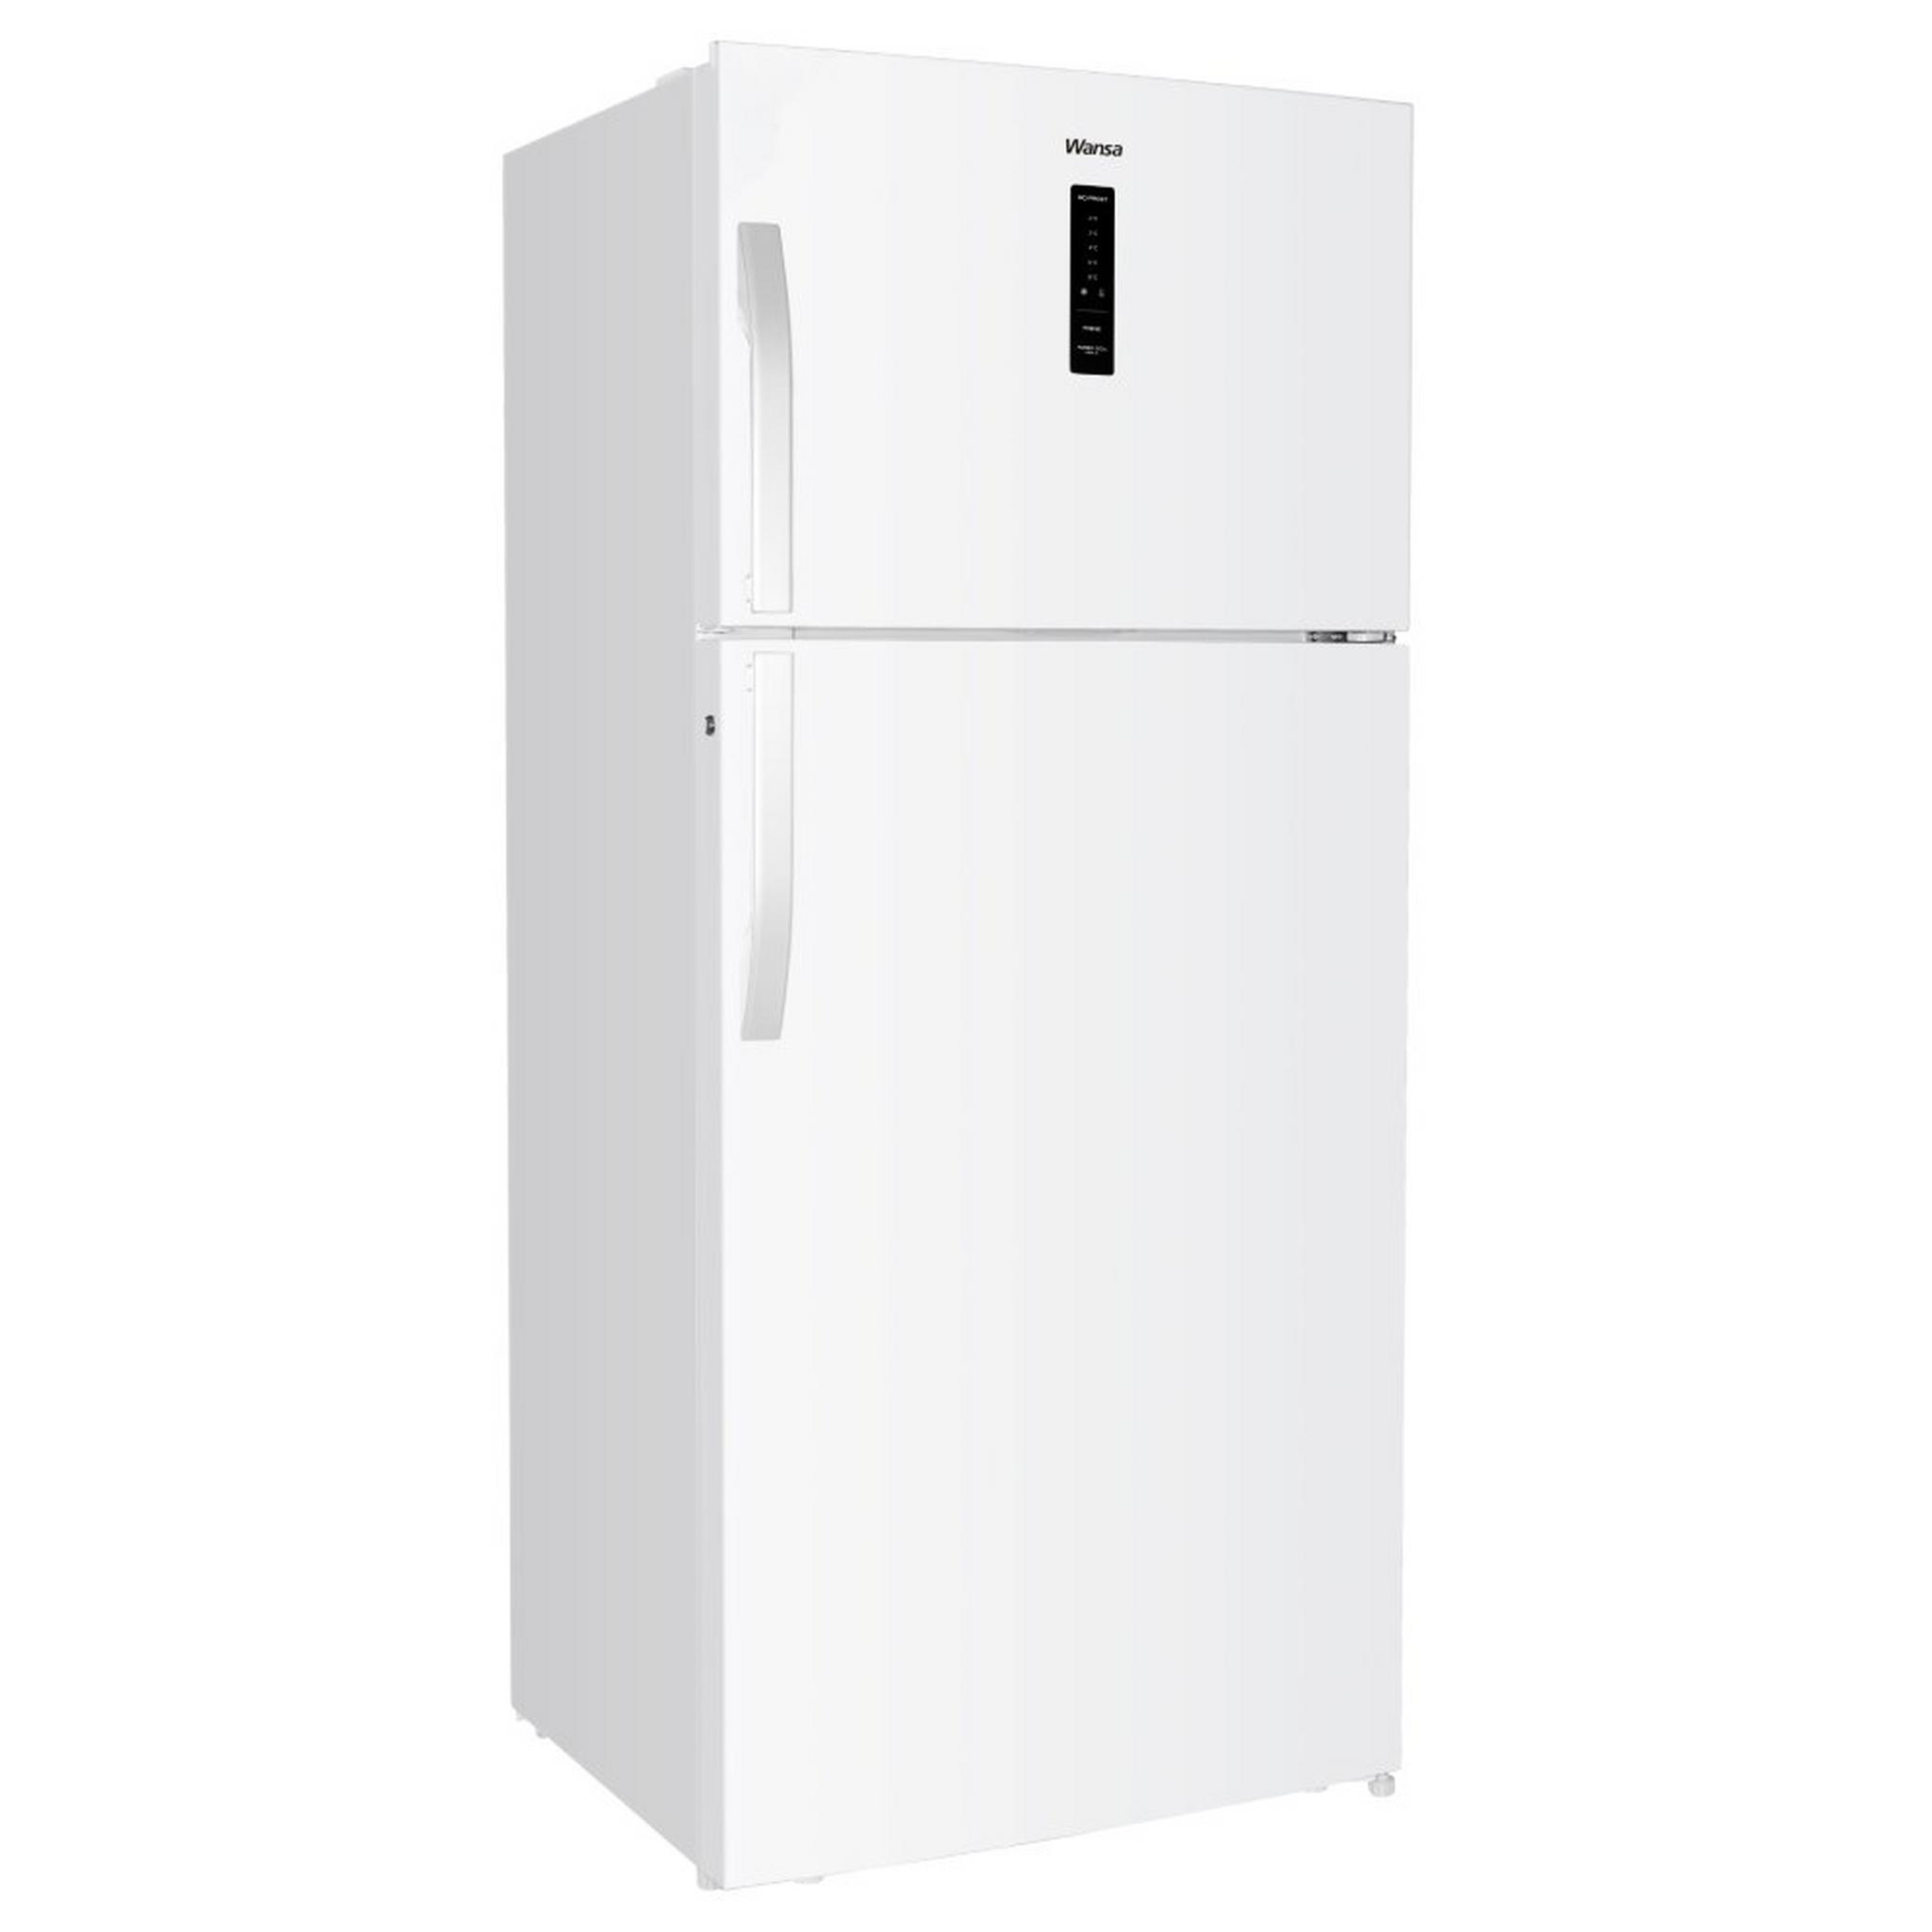 Wansa Top Mount Refrigerator, 20CFT, 571-Liters, WRTG-571-NFWTC82 - White